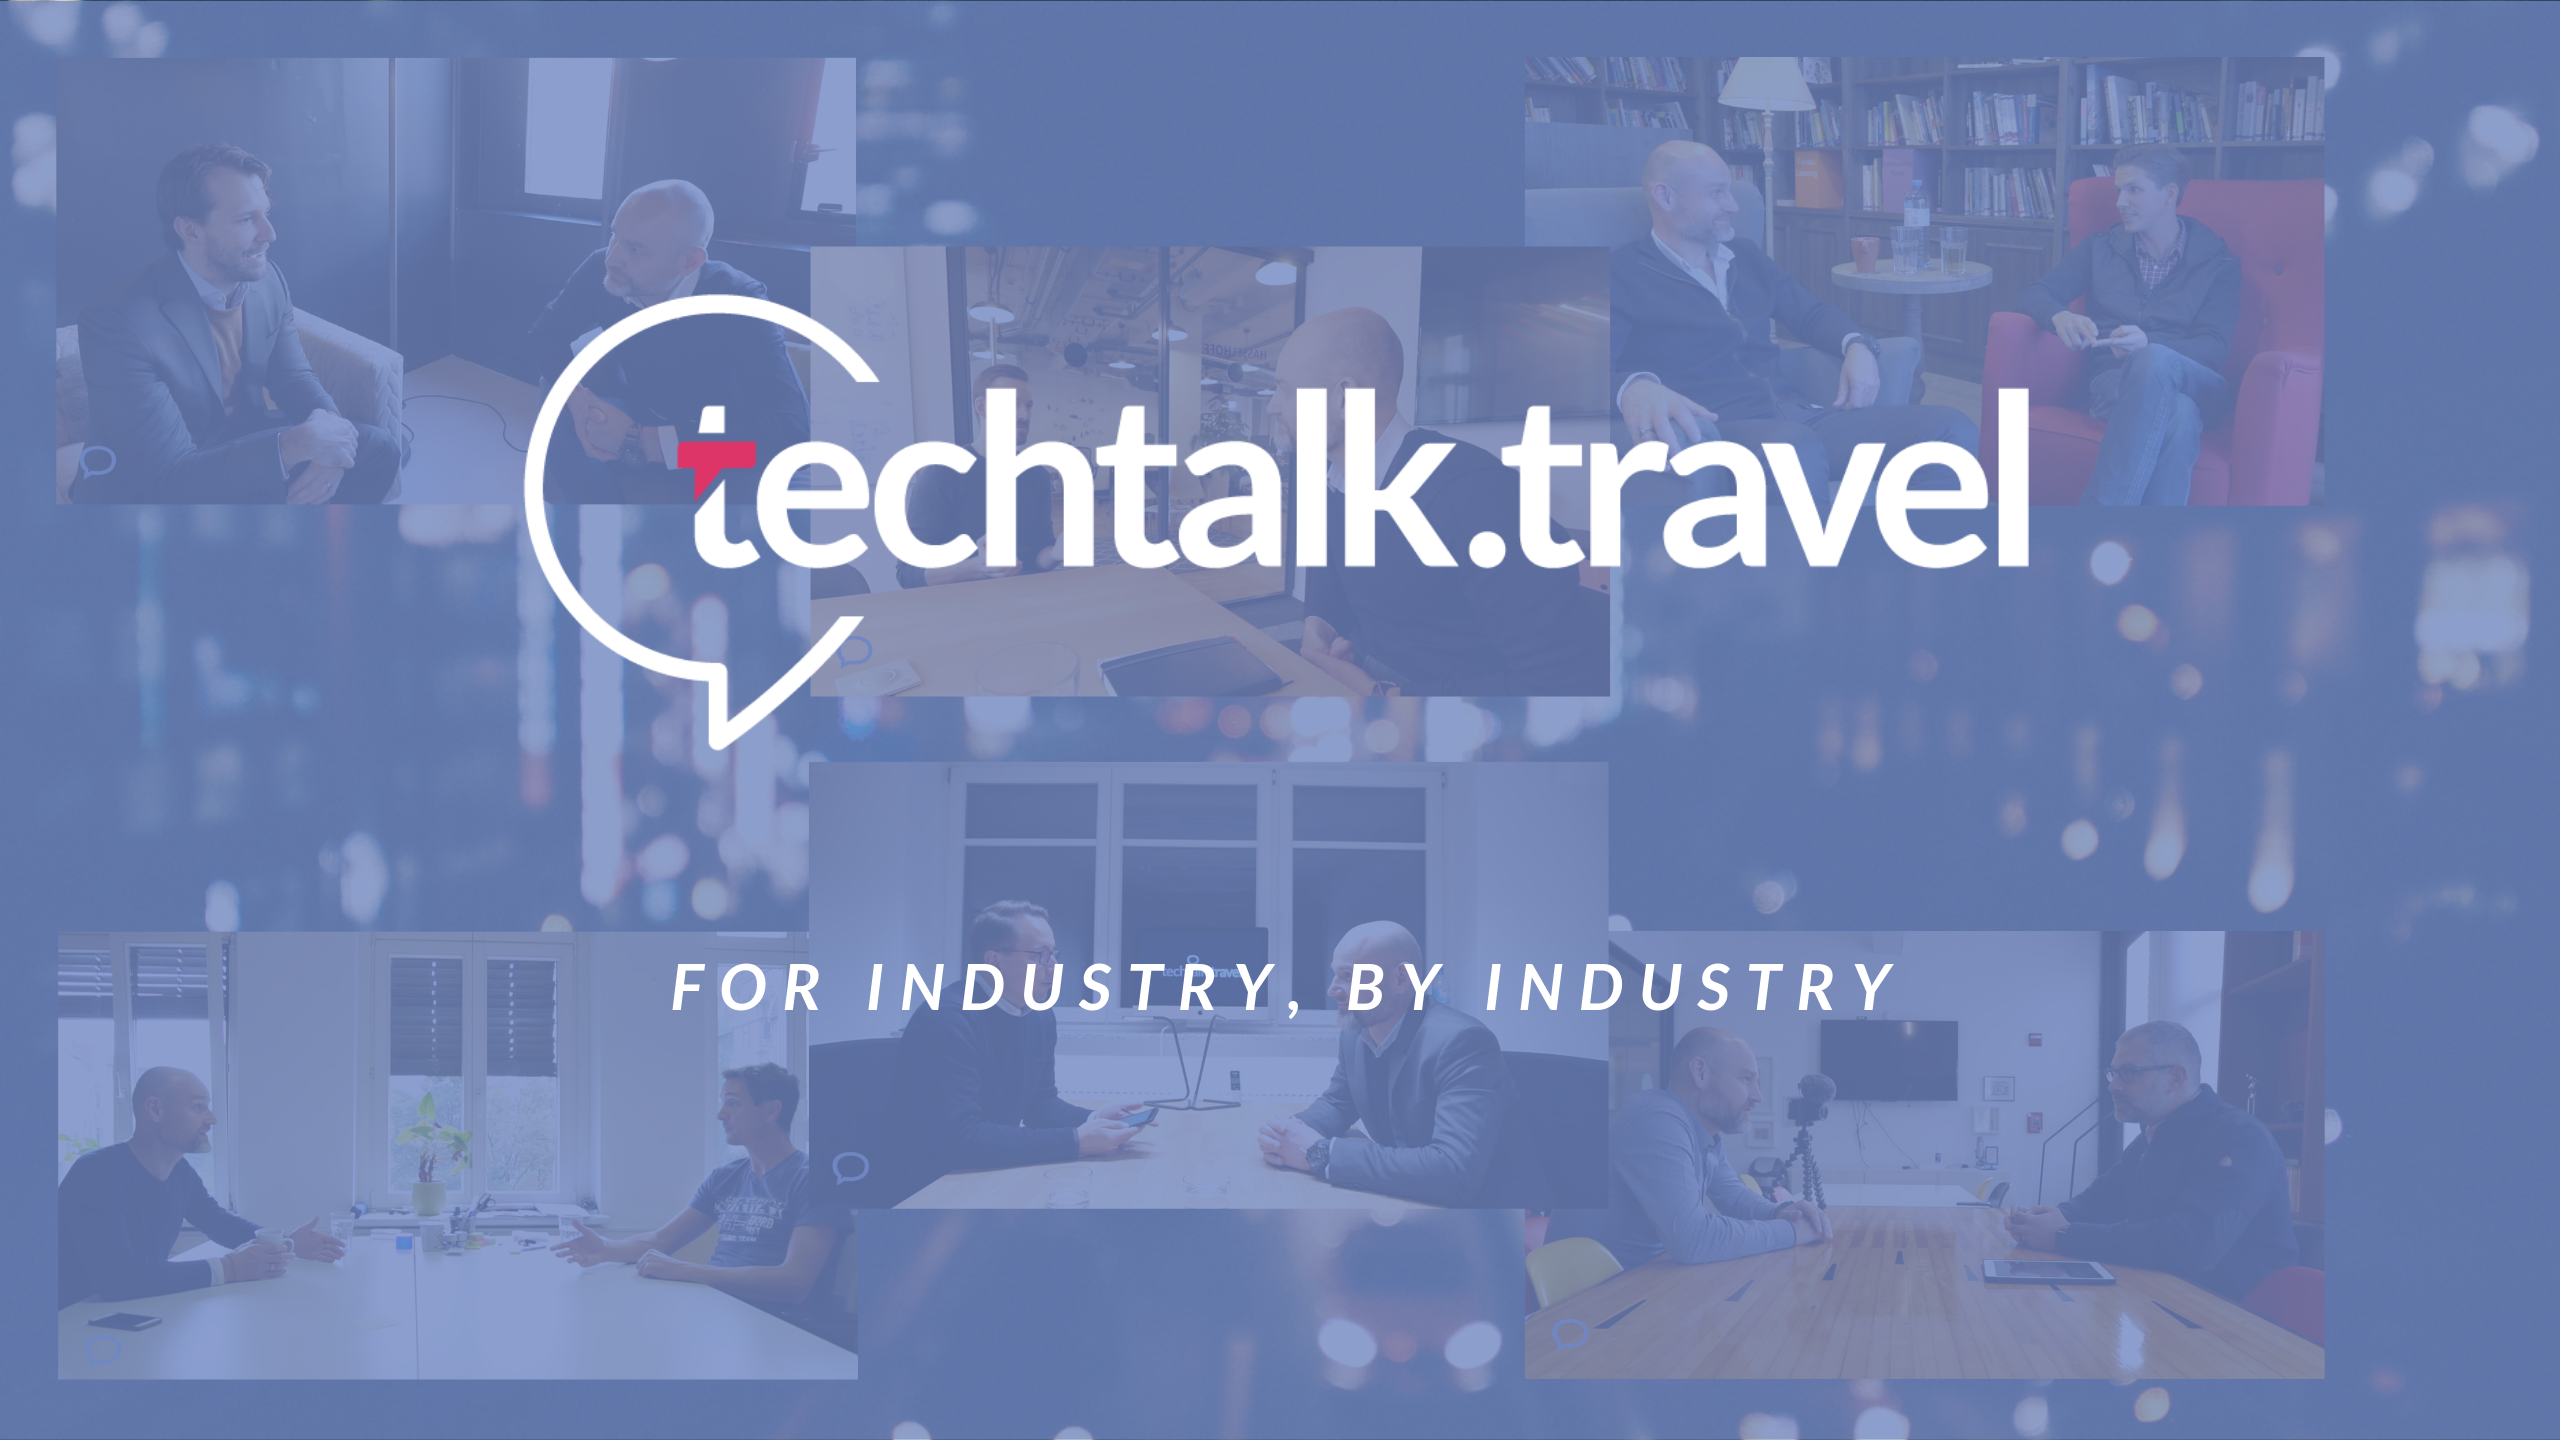 (c) Techtalk.travel